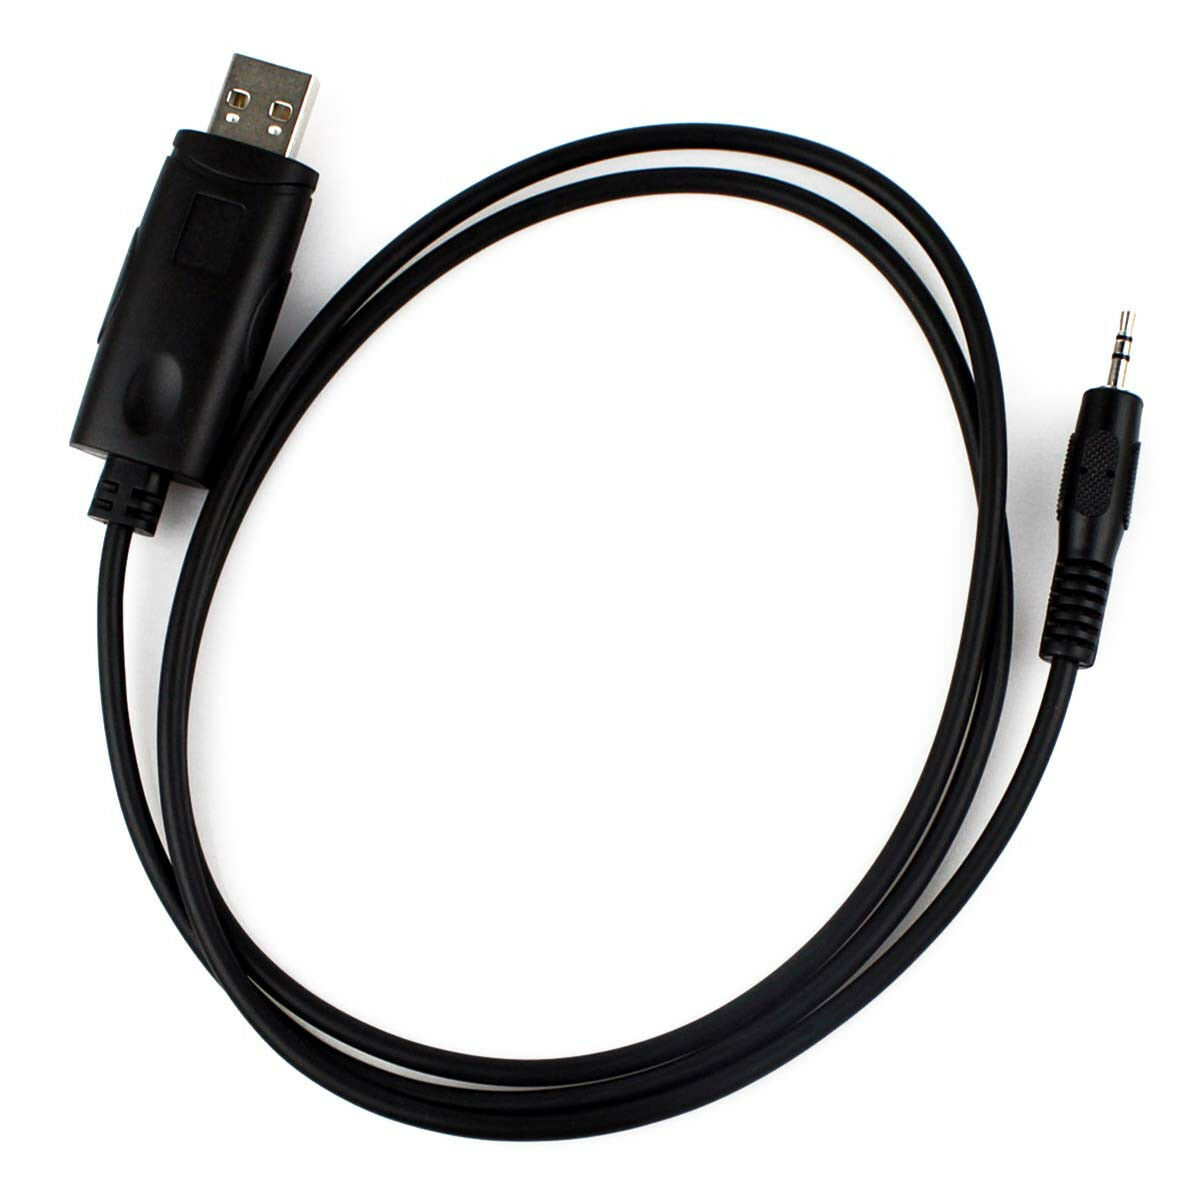 1Pin 2.5mm USB Programming Cable for MOTOROLA GP88S